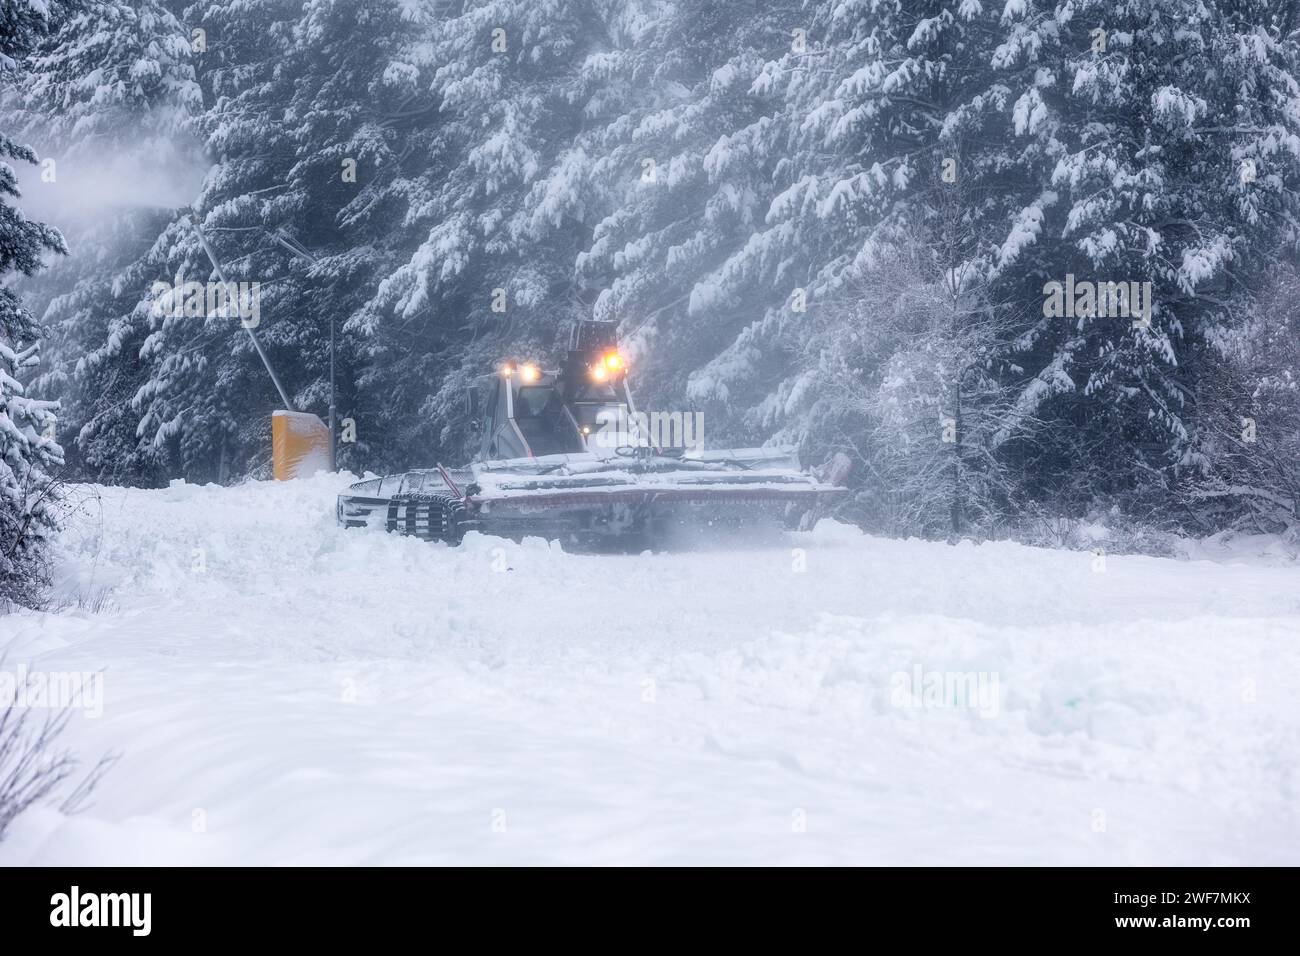 Snow groomer snowcat ratrack machine preparing ski slope for alpine skiing, winter resort Bansko, Bulgaria Stock Photo